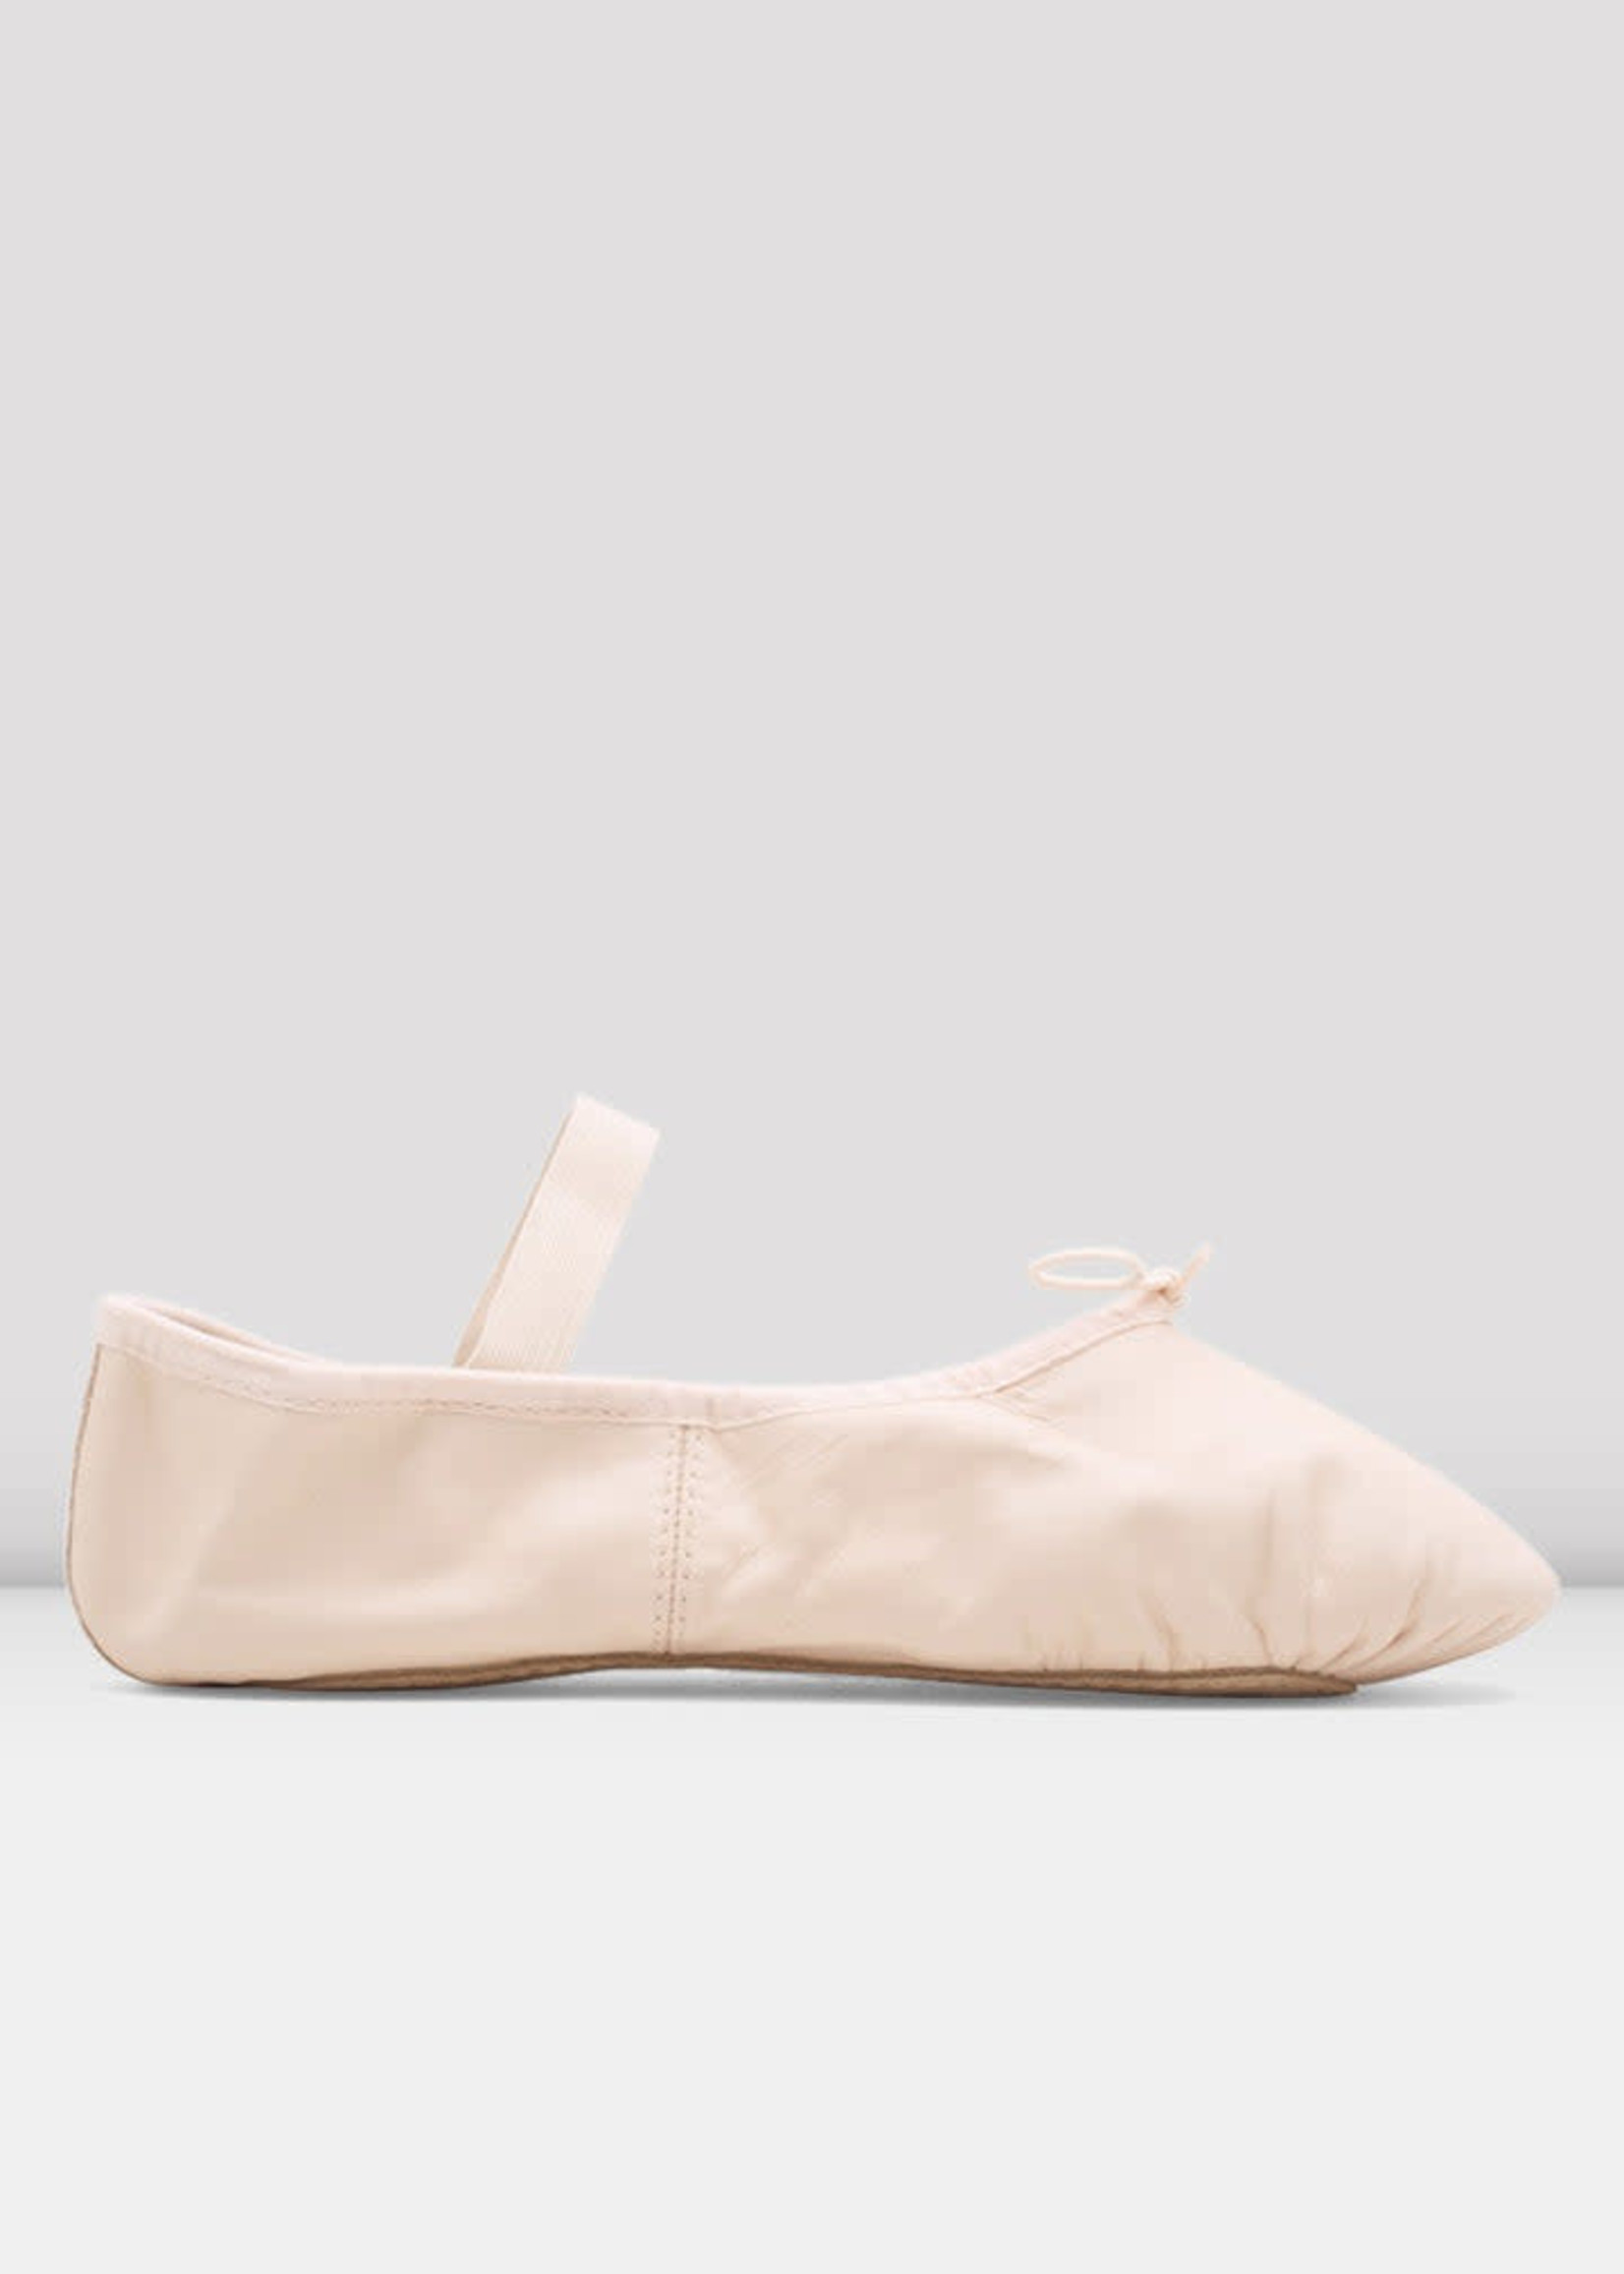 Bloch Dansoft Full Footed Adult Ballet Shoe